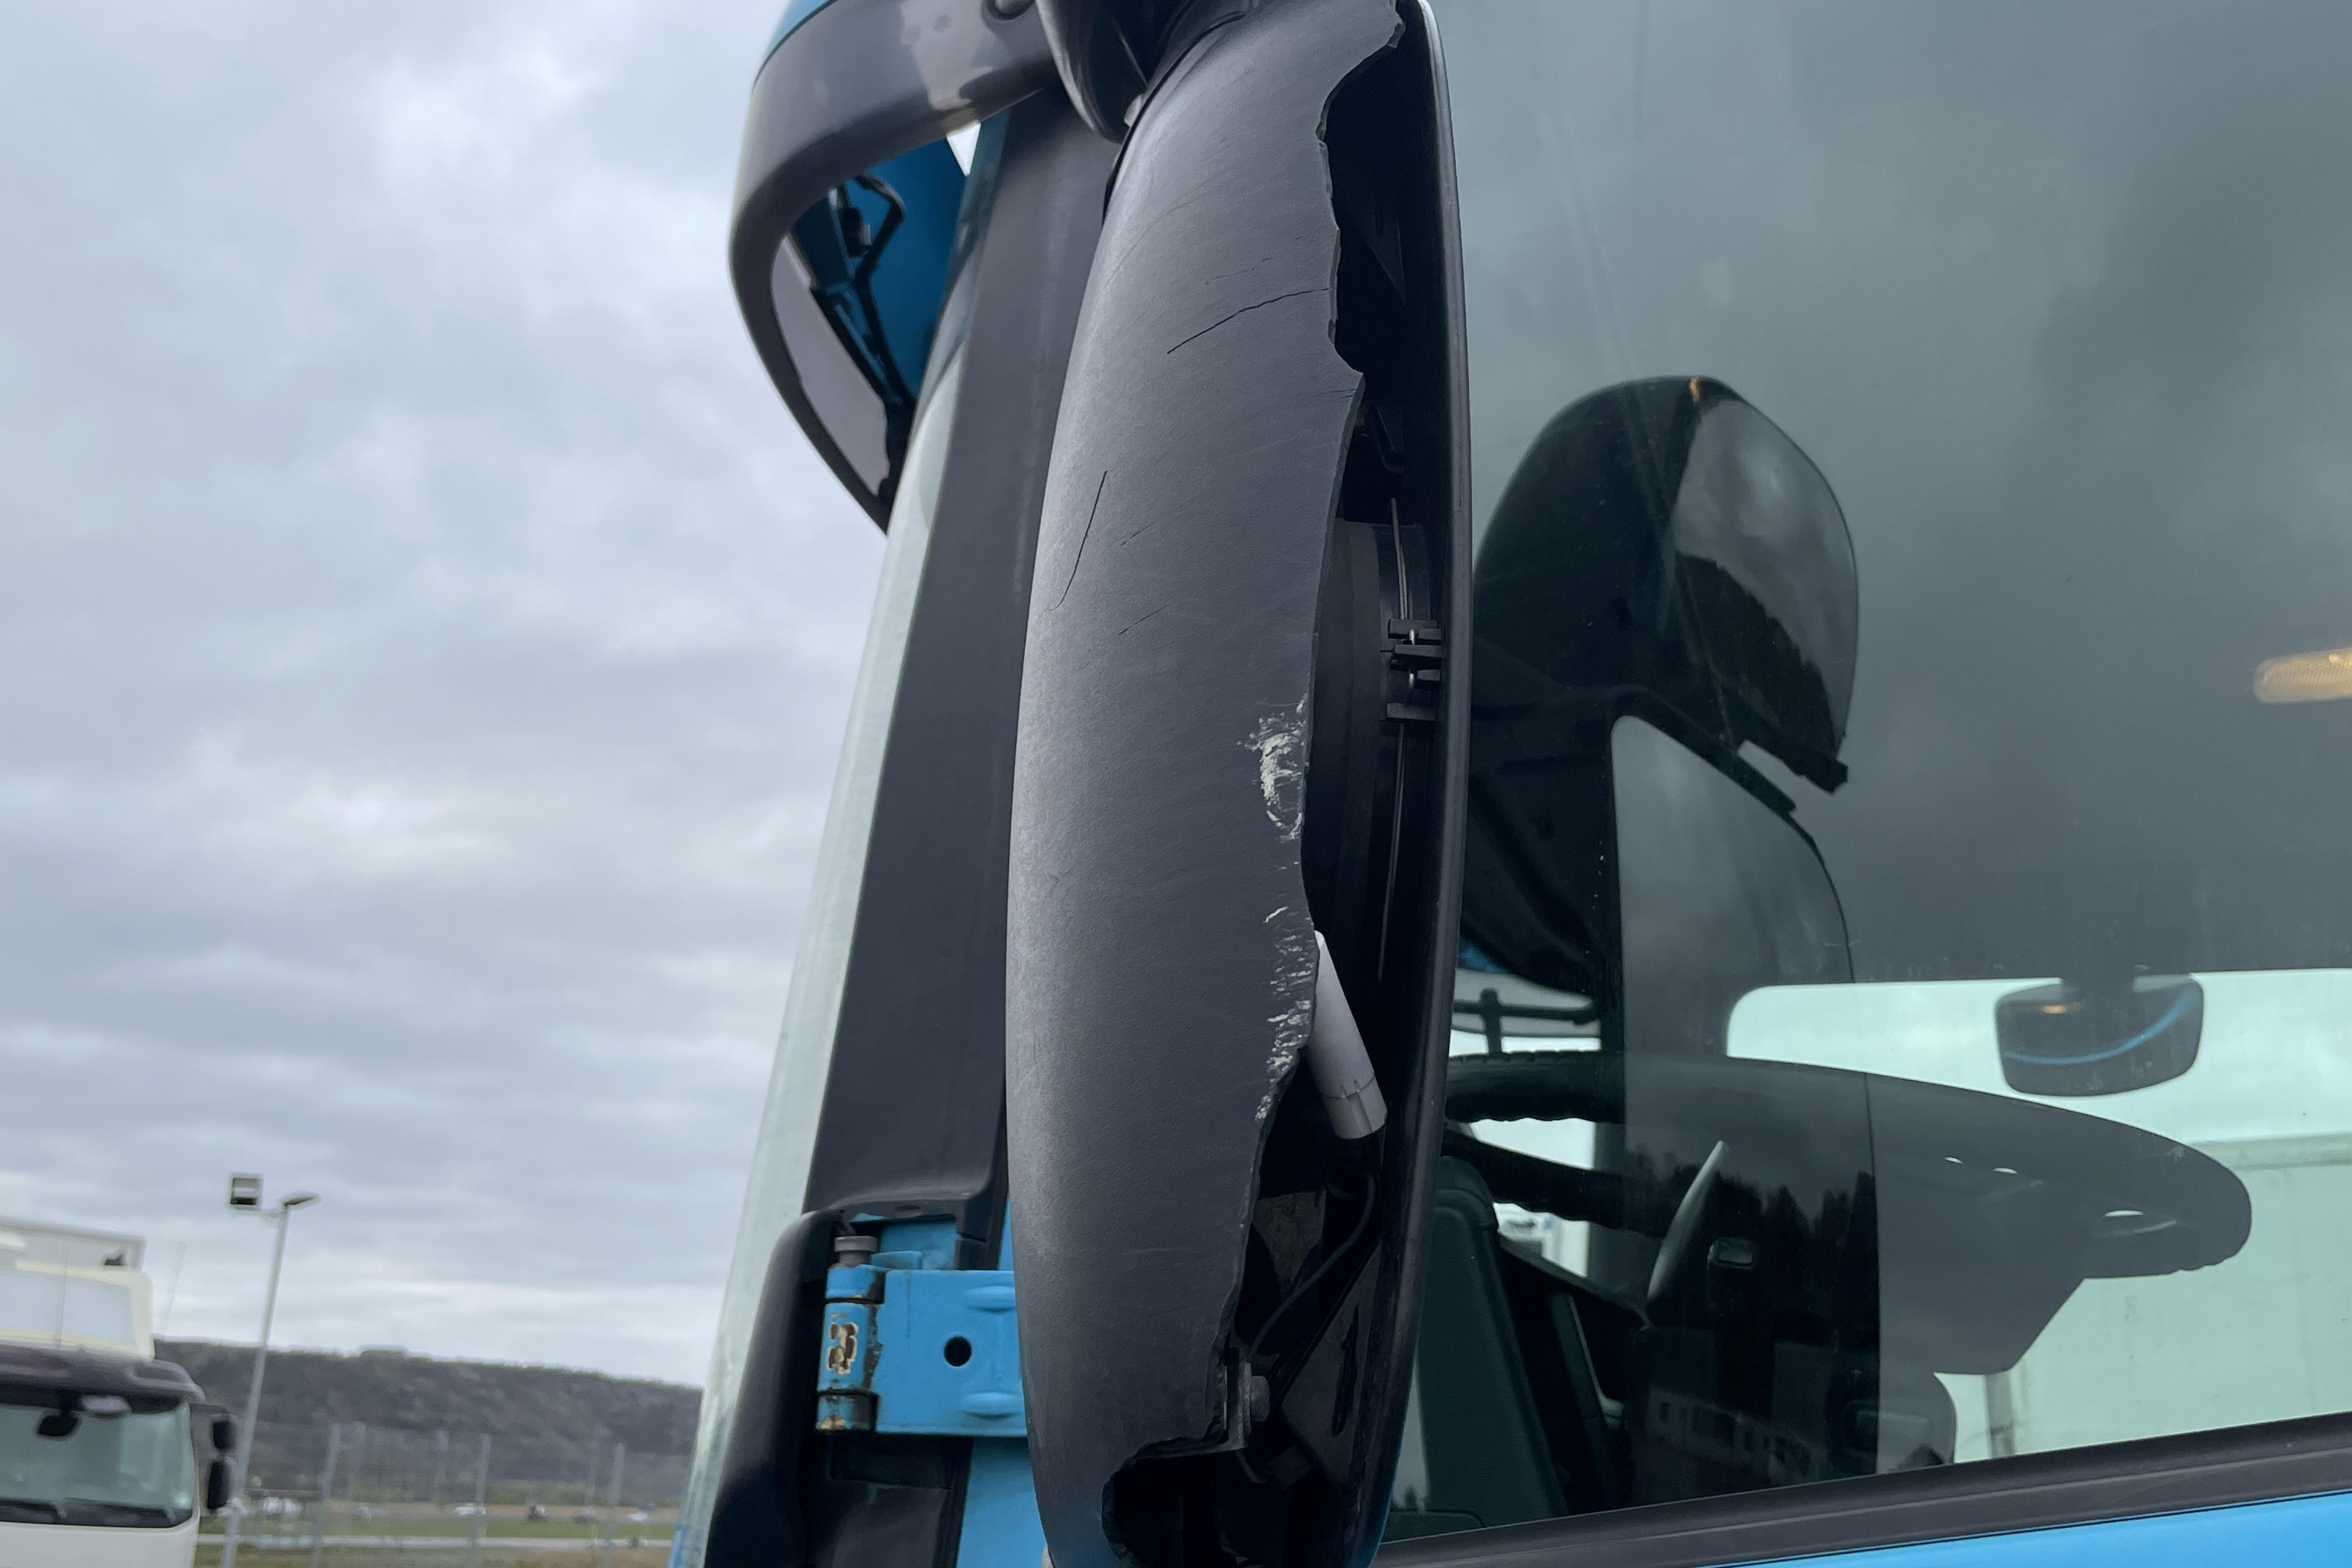 Scania P230 - 661 640 km - Automat - blå - 2013